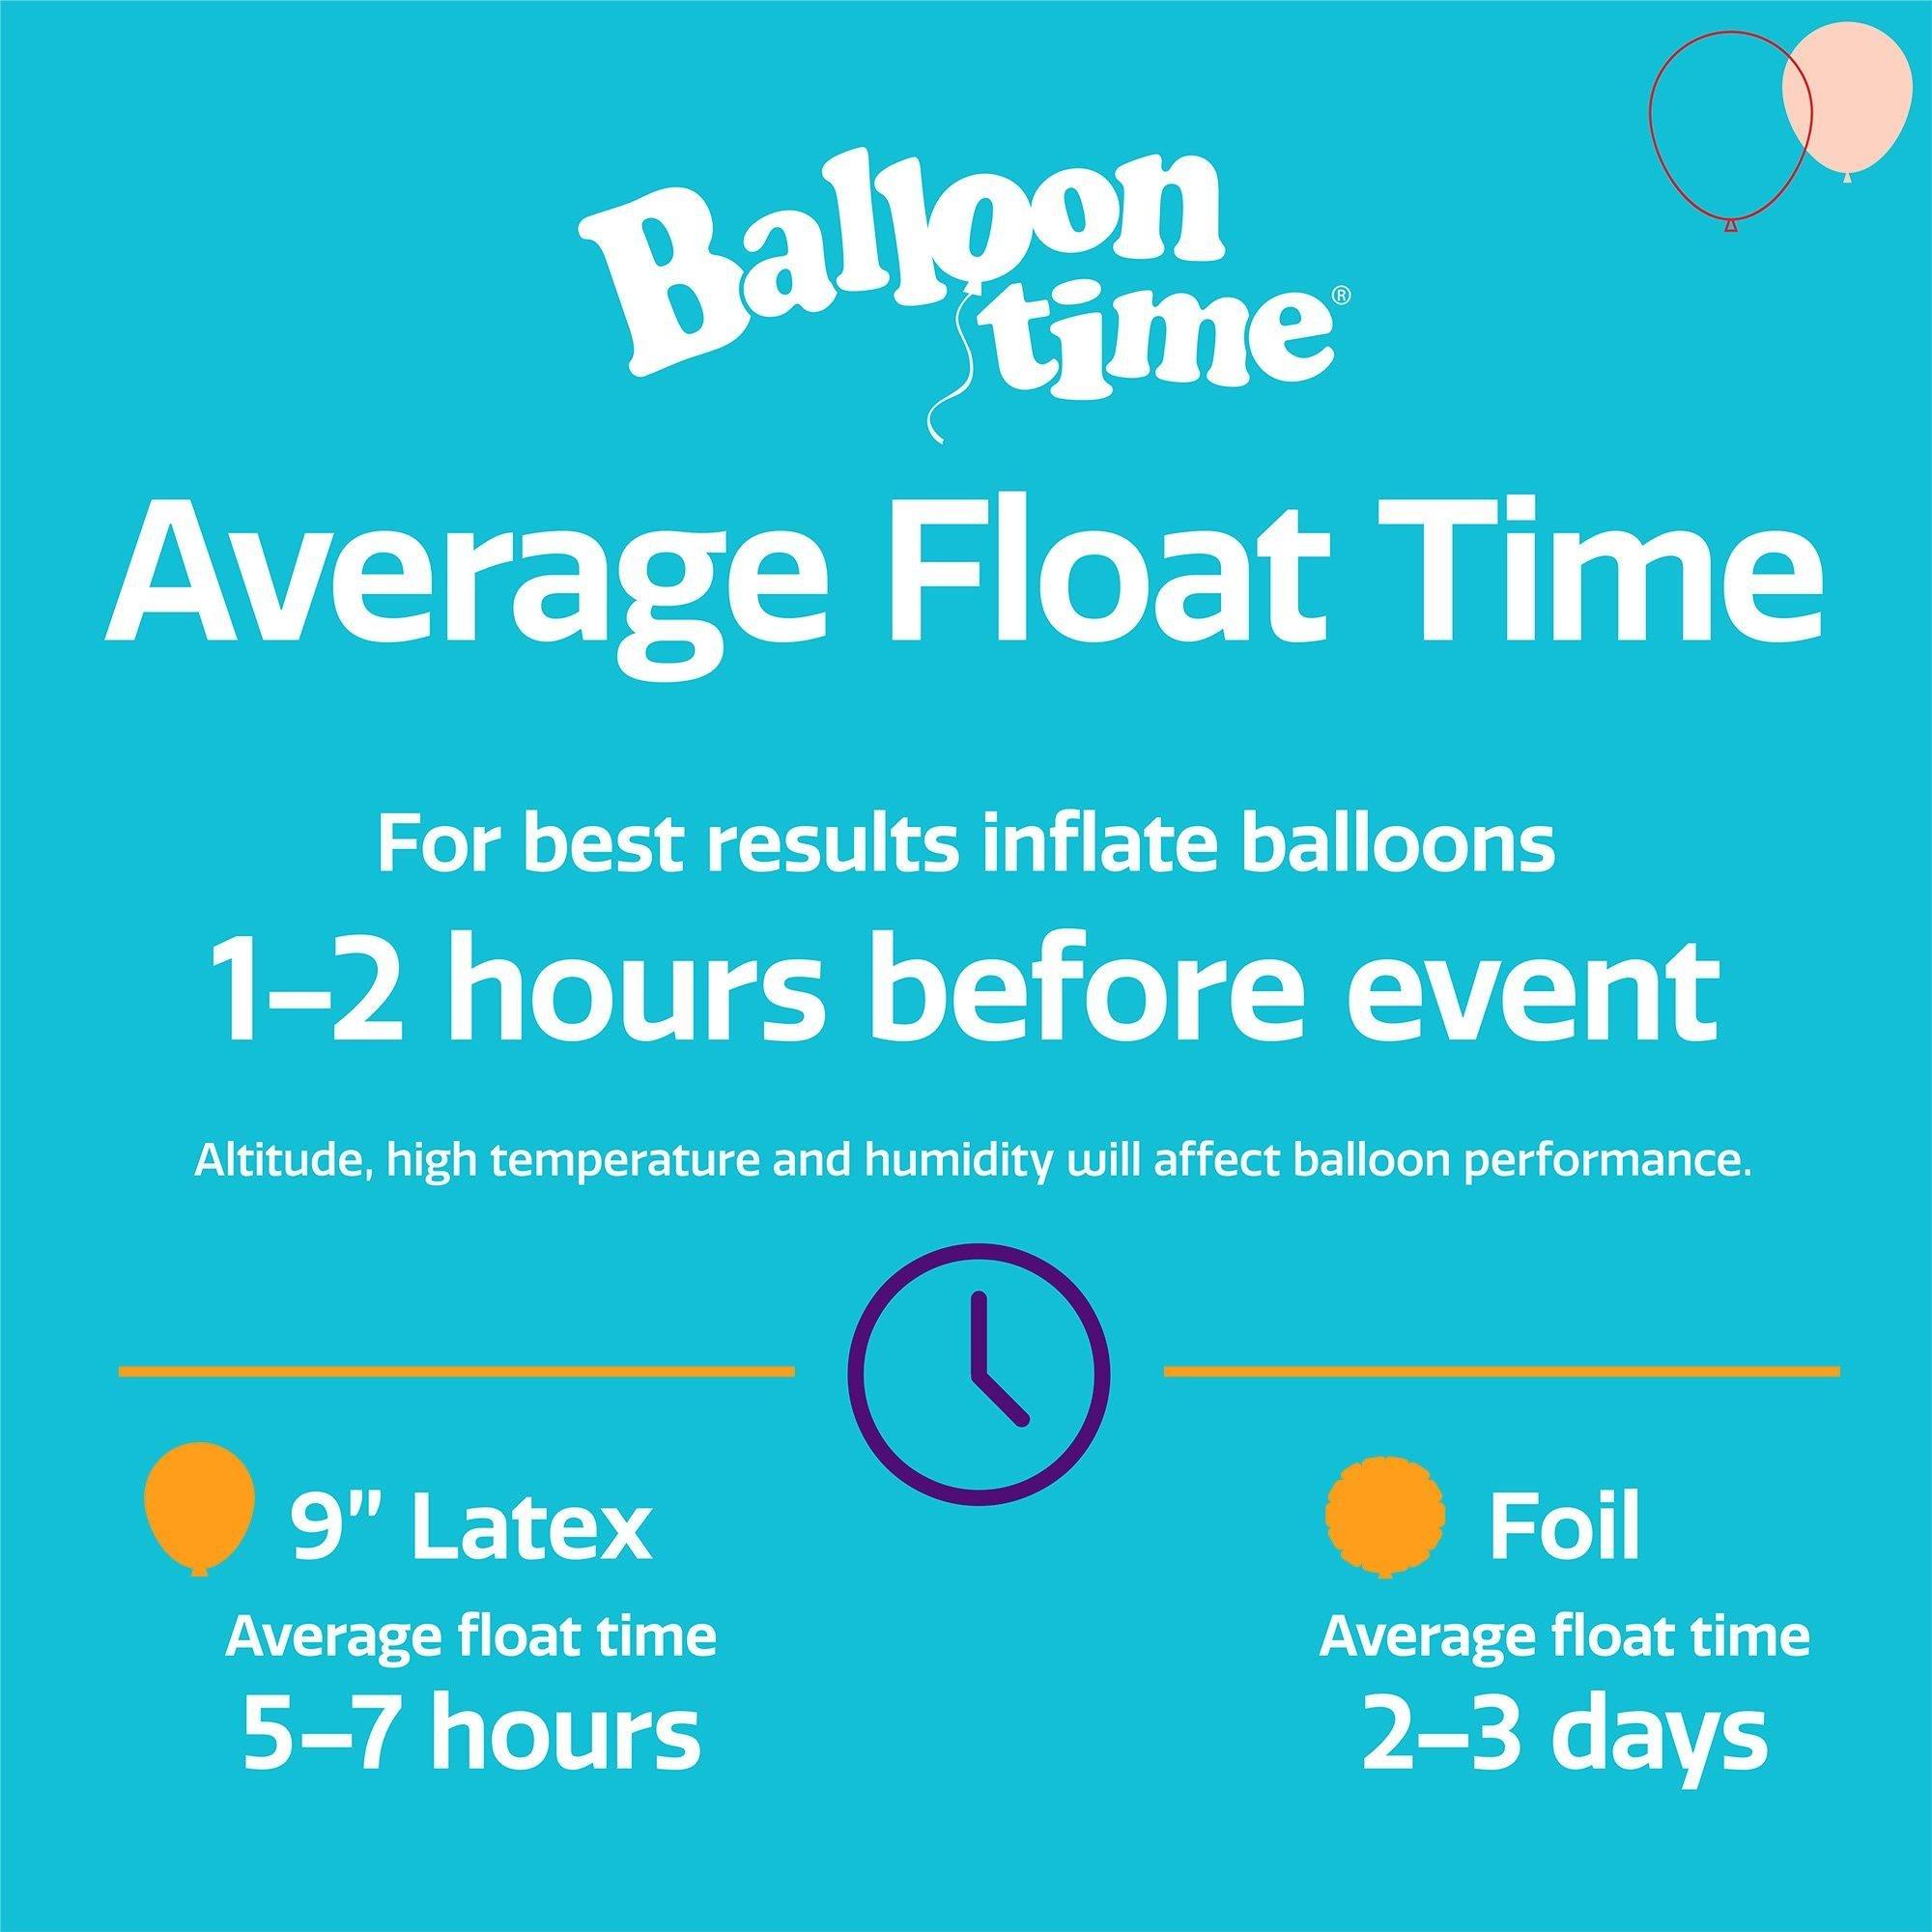 Balloon Time Jumbo Helium Tank 14.9cu ft, 12in